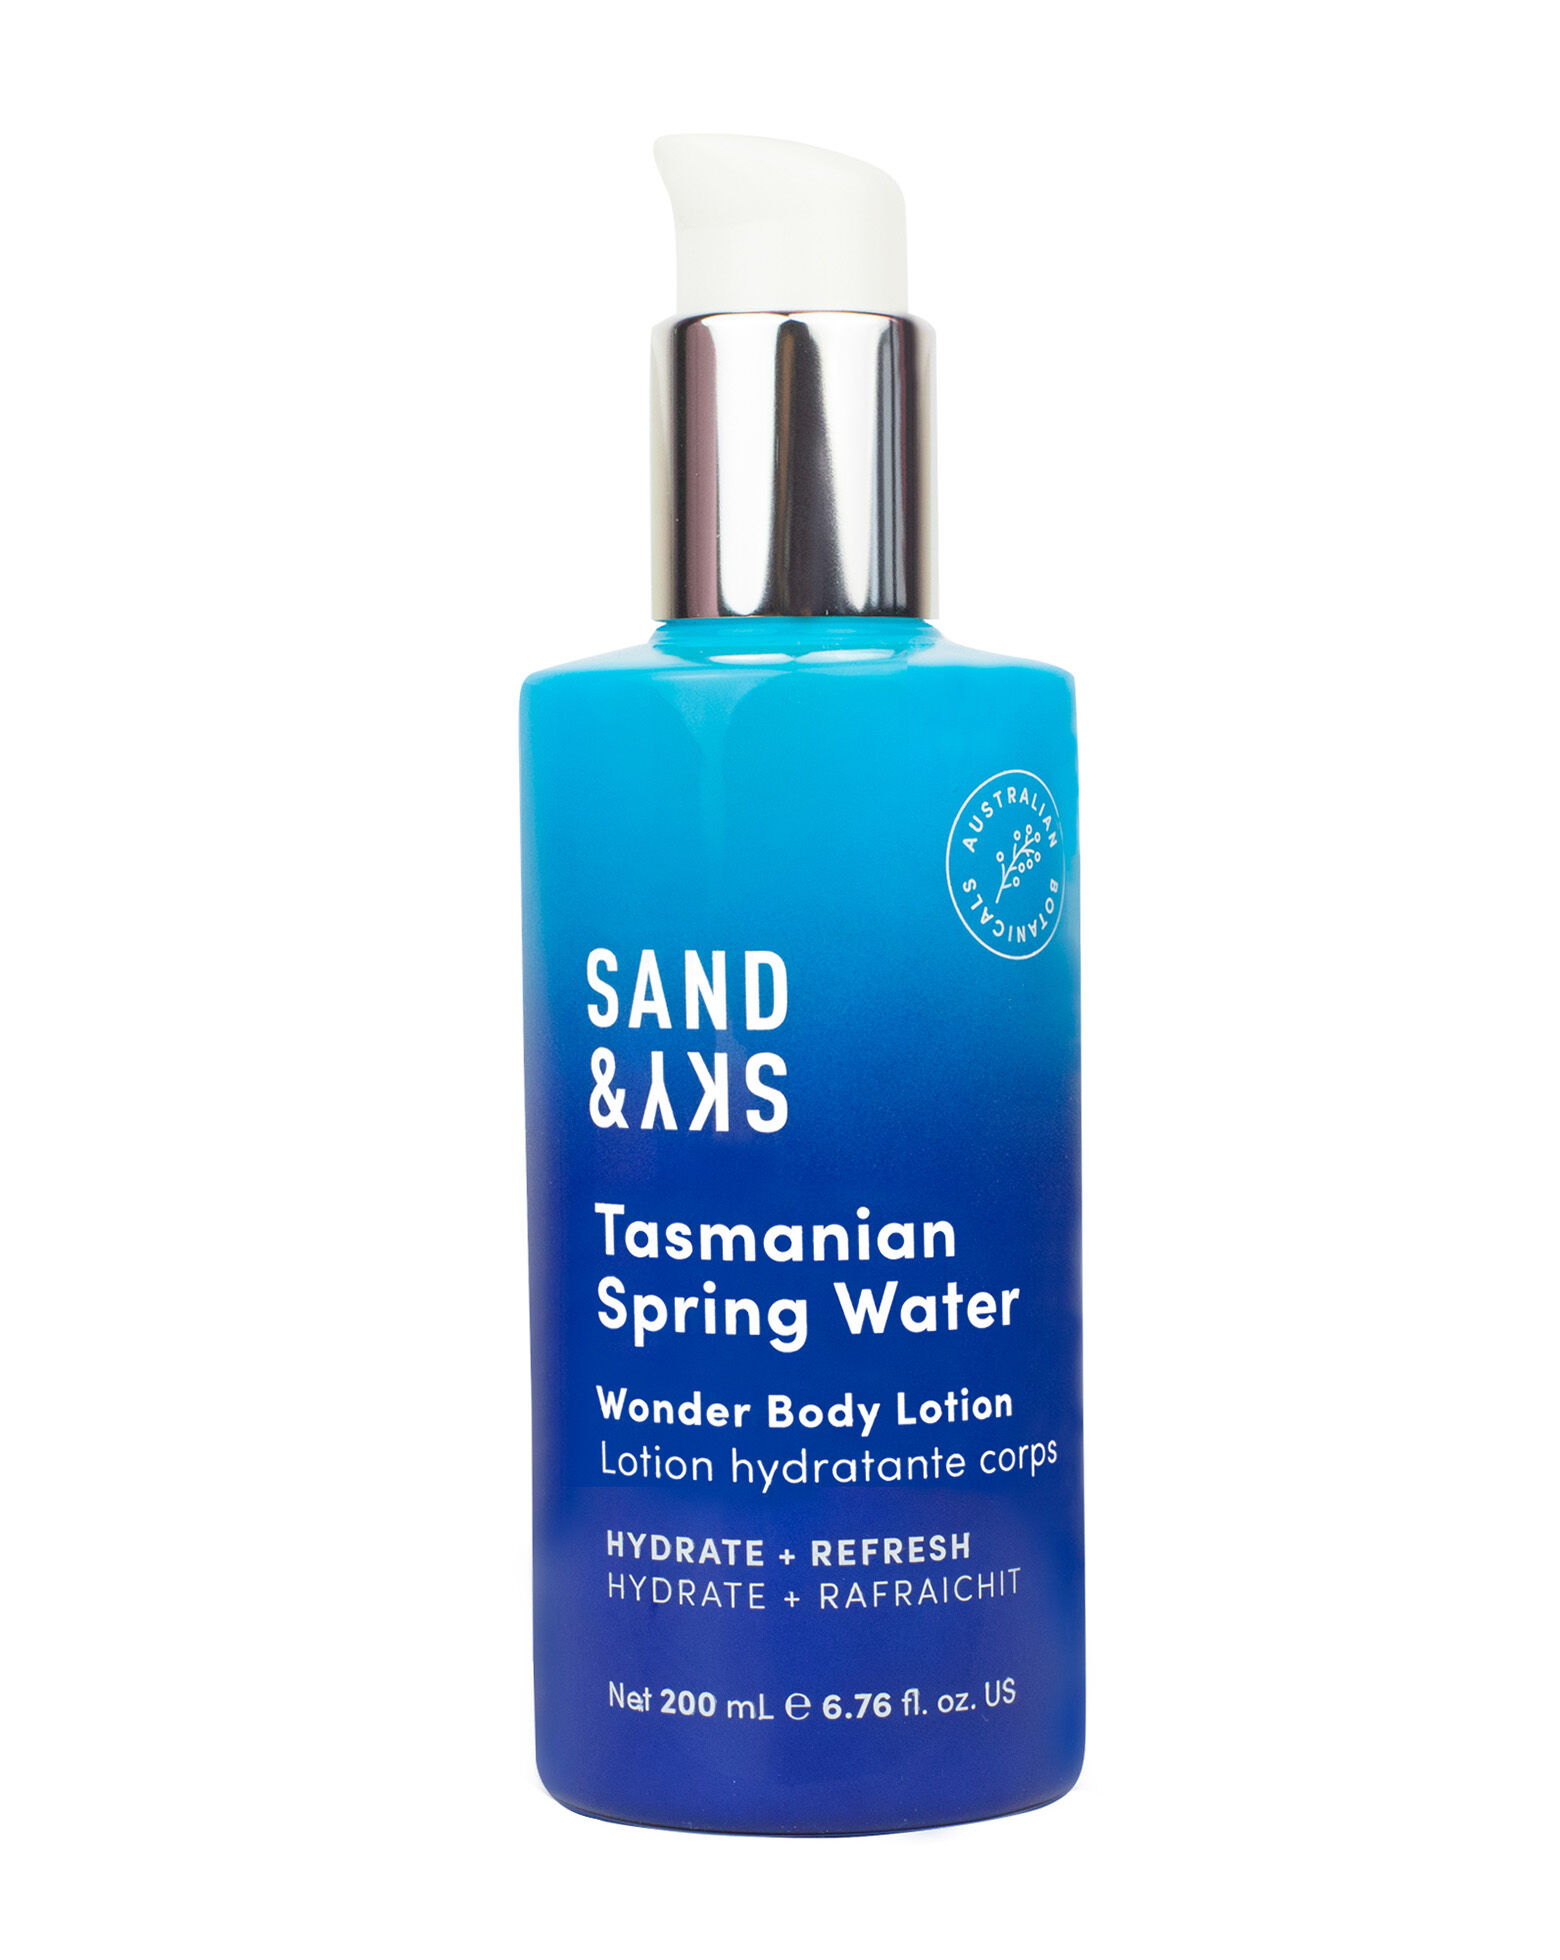 Sand&Sky - Tasmanian Spring Water Wonder Body Lotion